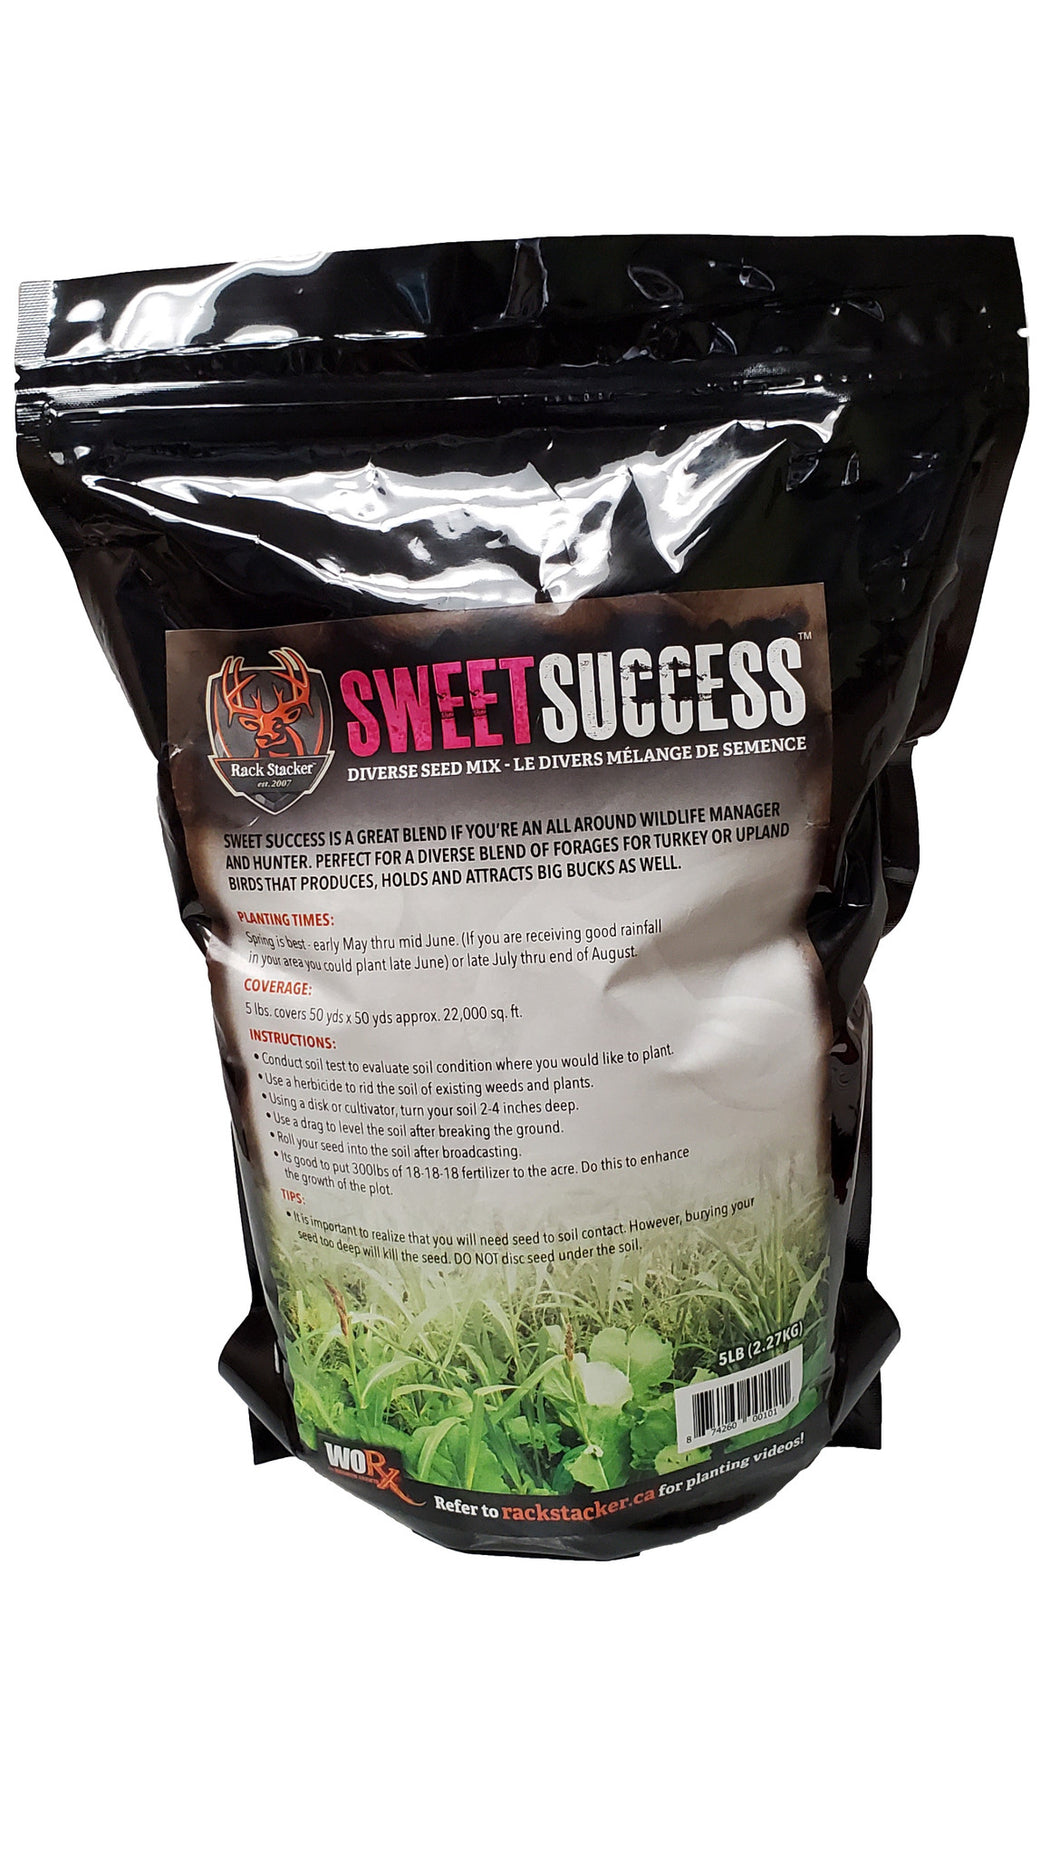 Sweet Success - Diverse Seed Mix